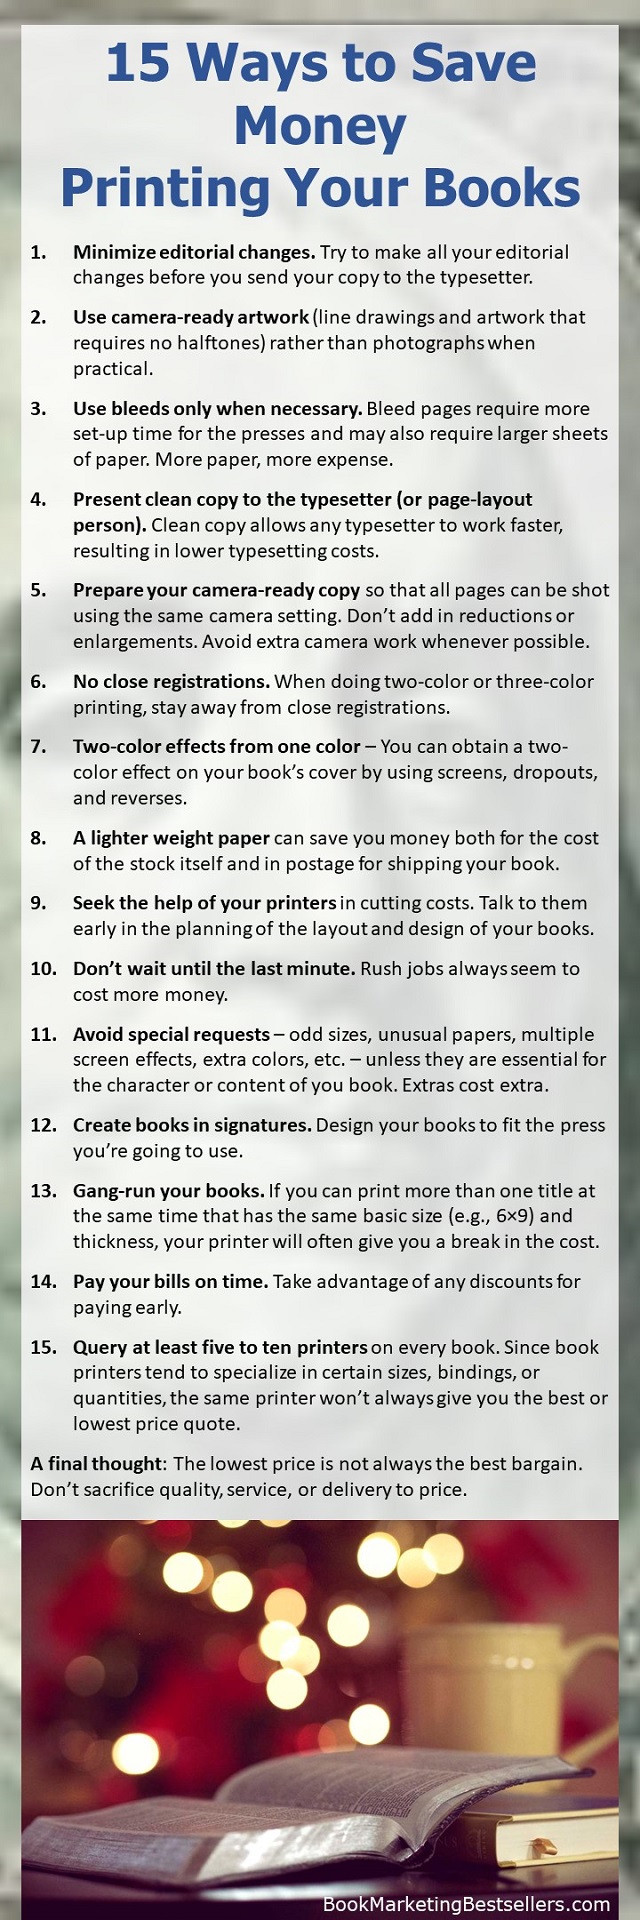 Book Printing Savings Tips: 15 Ways to Save Money Printing Your Books